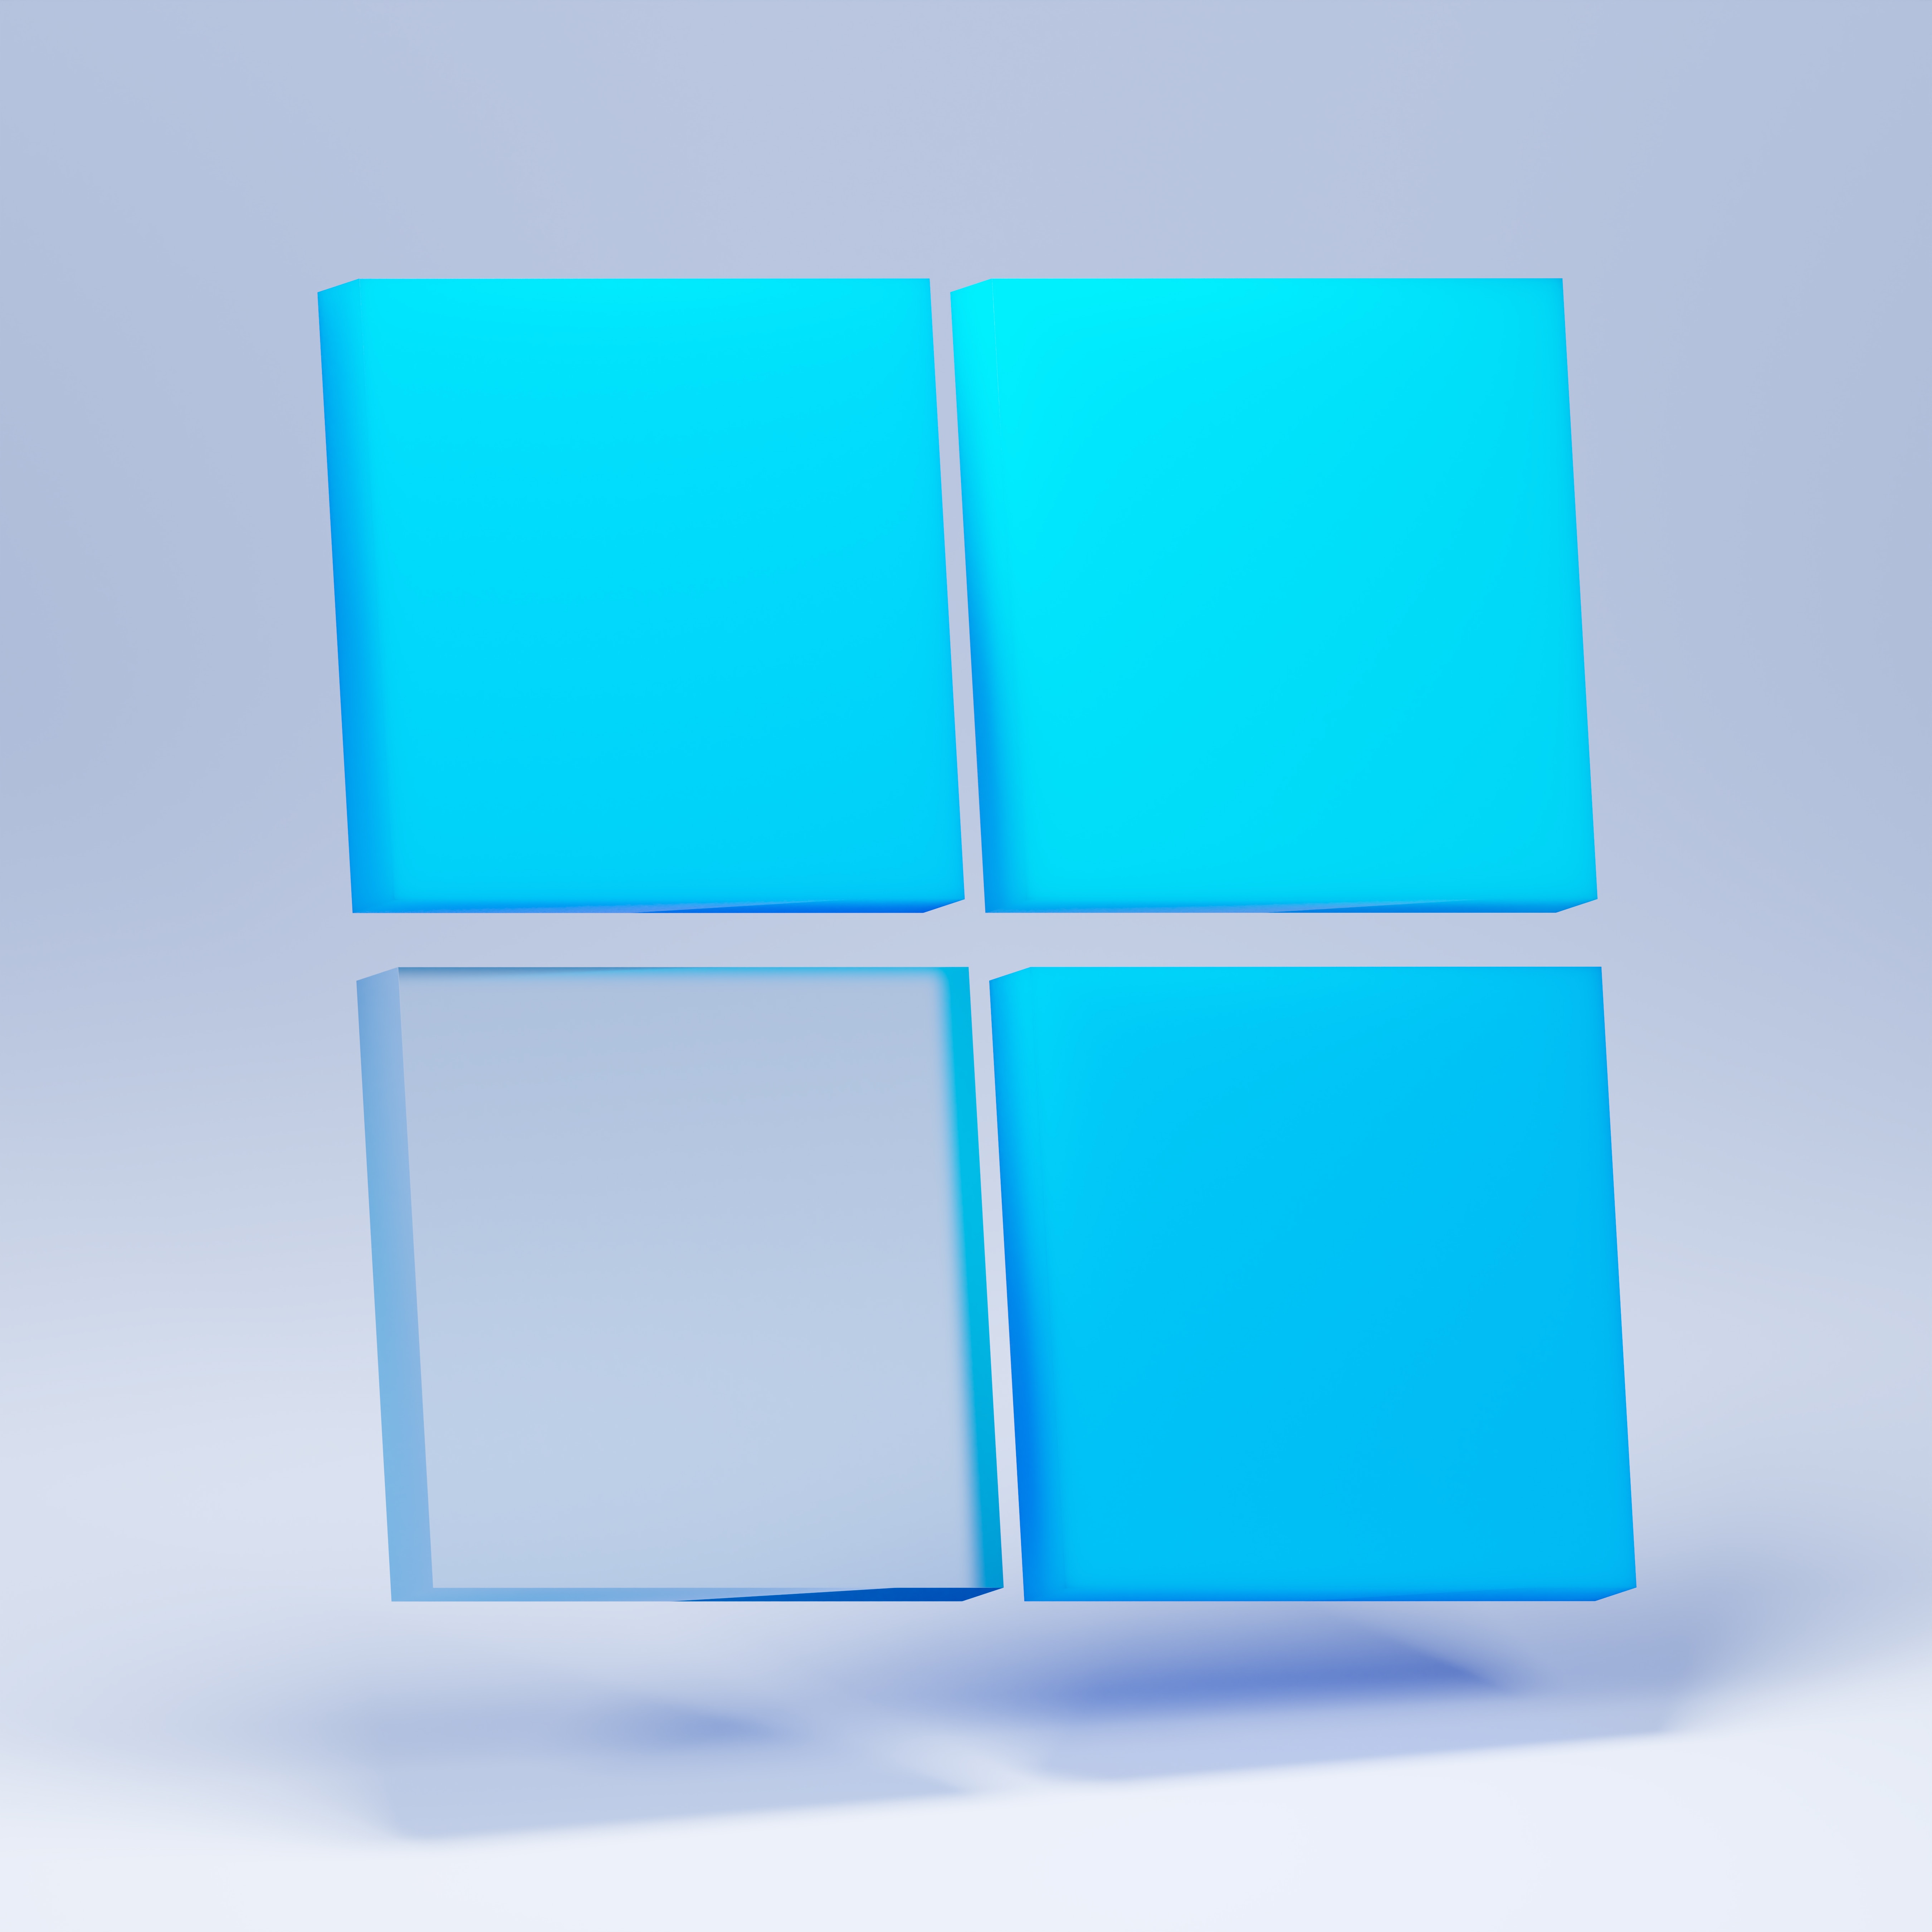 Microsoft logo in blue